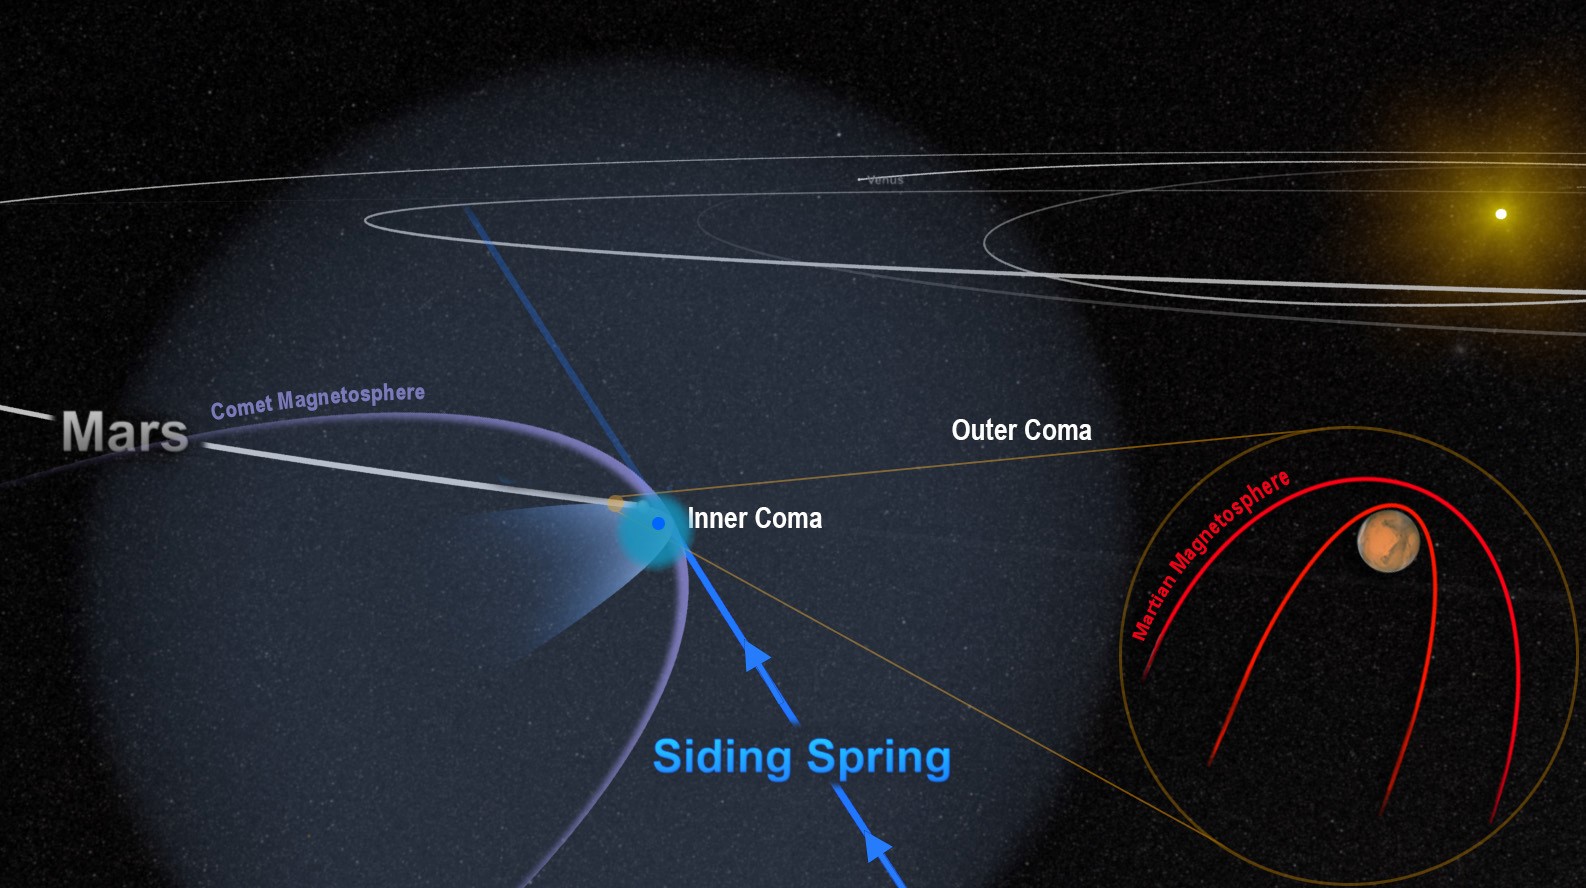 Comet Siding Spring Flies by Mars in 2014